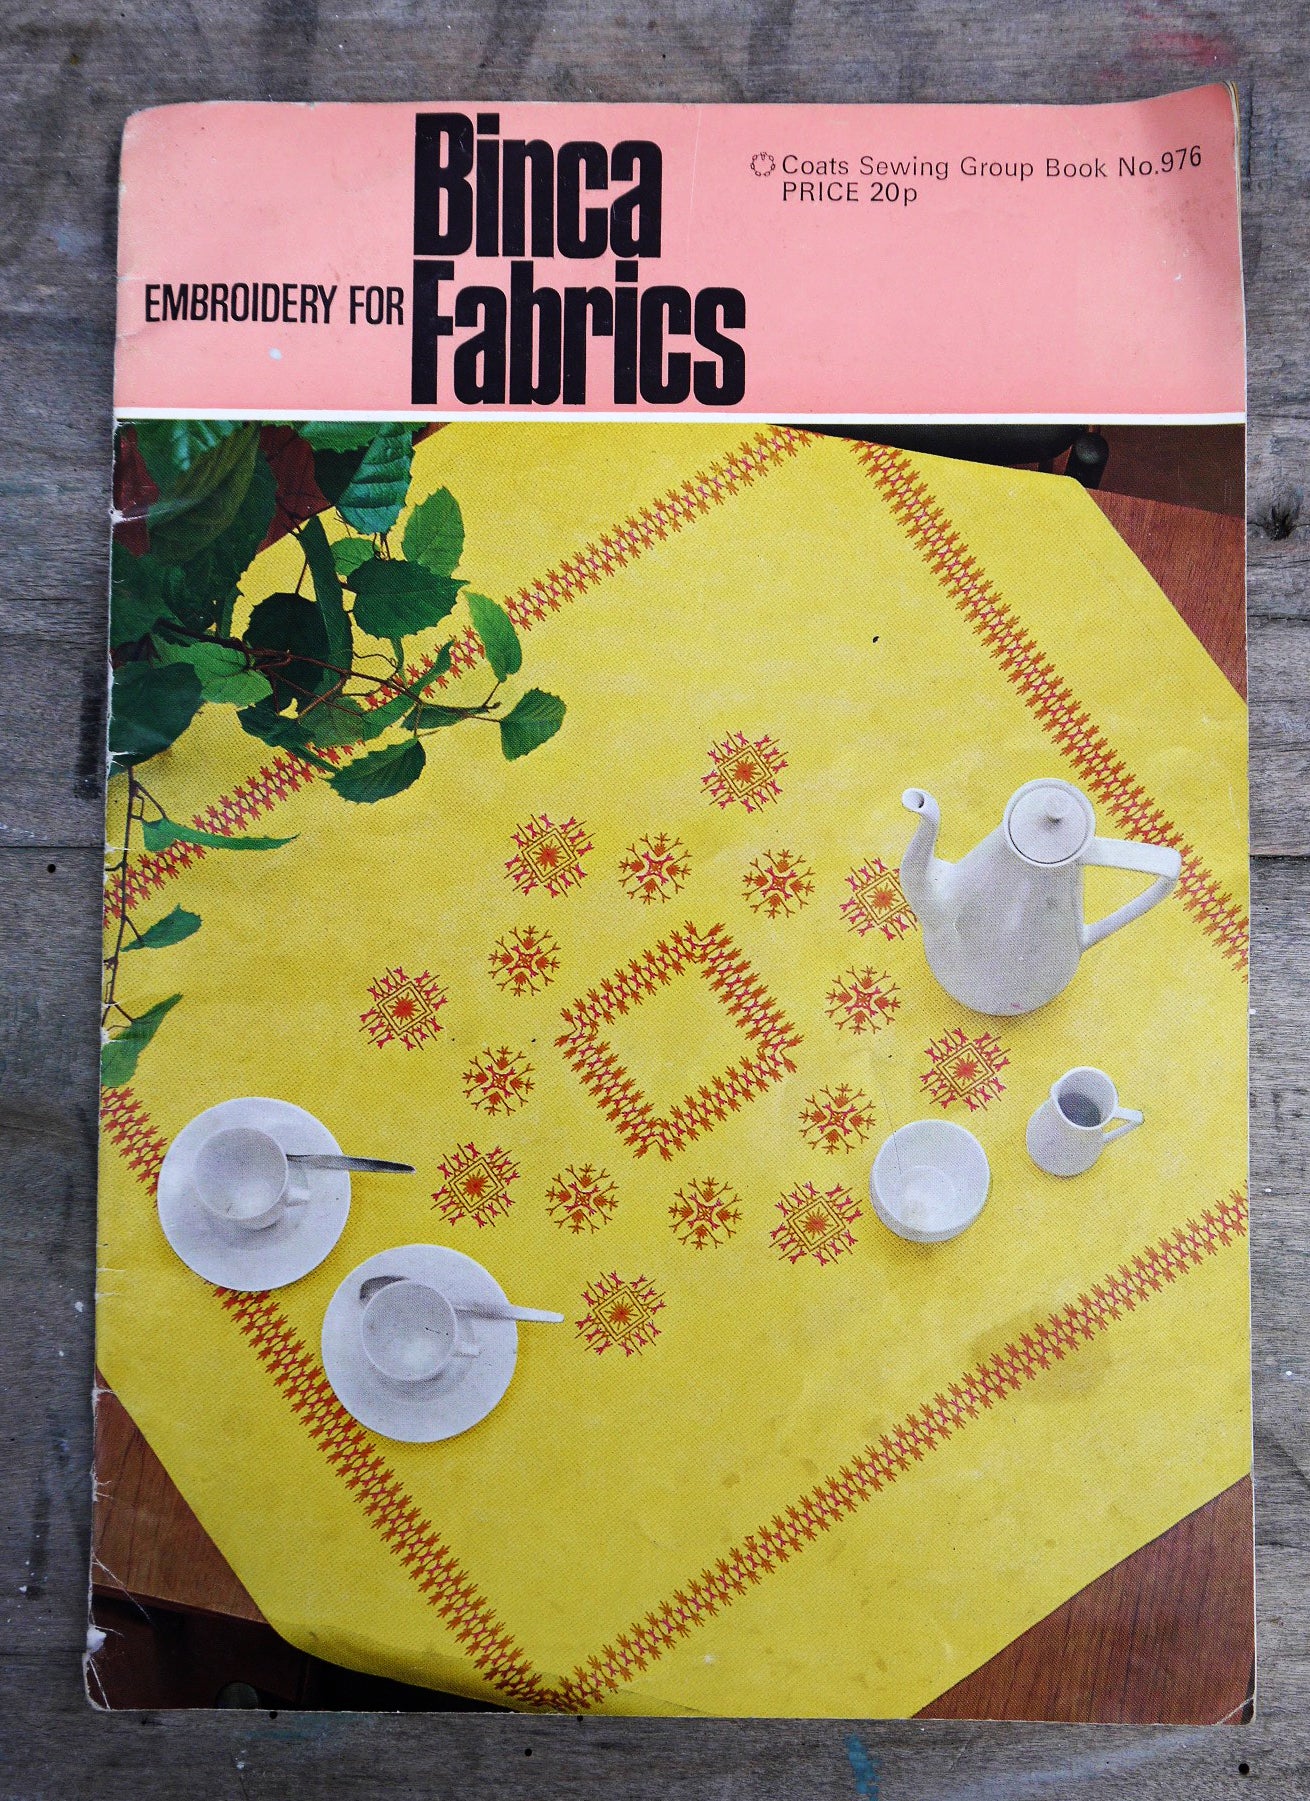 Vintage cross stitch pattern book